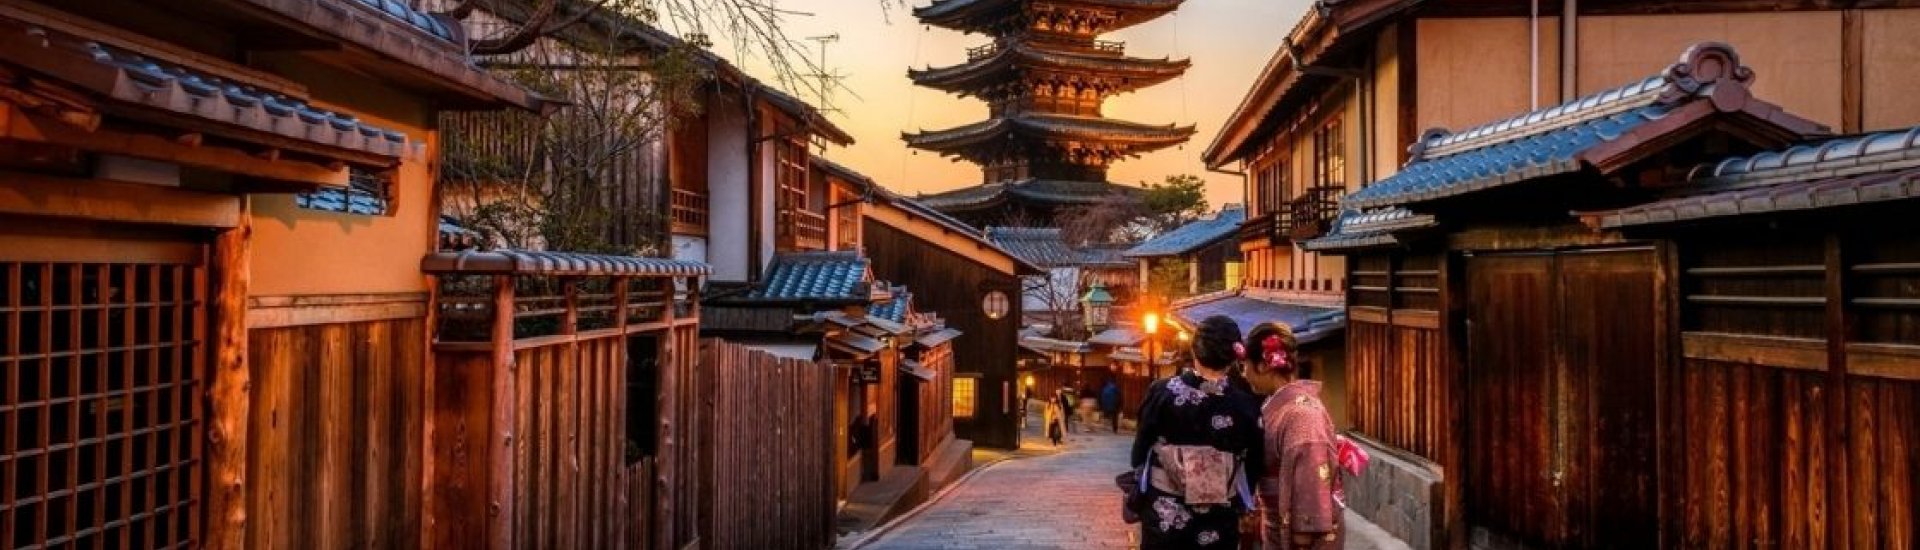 two geishas walking through kyoto gion district at sunset